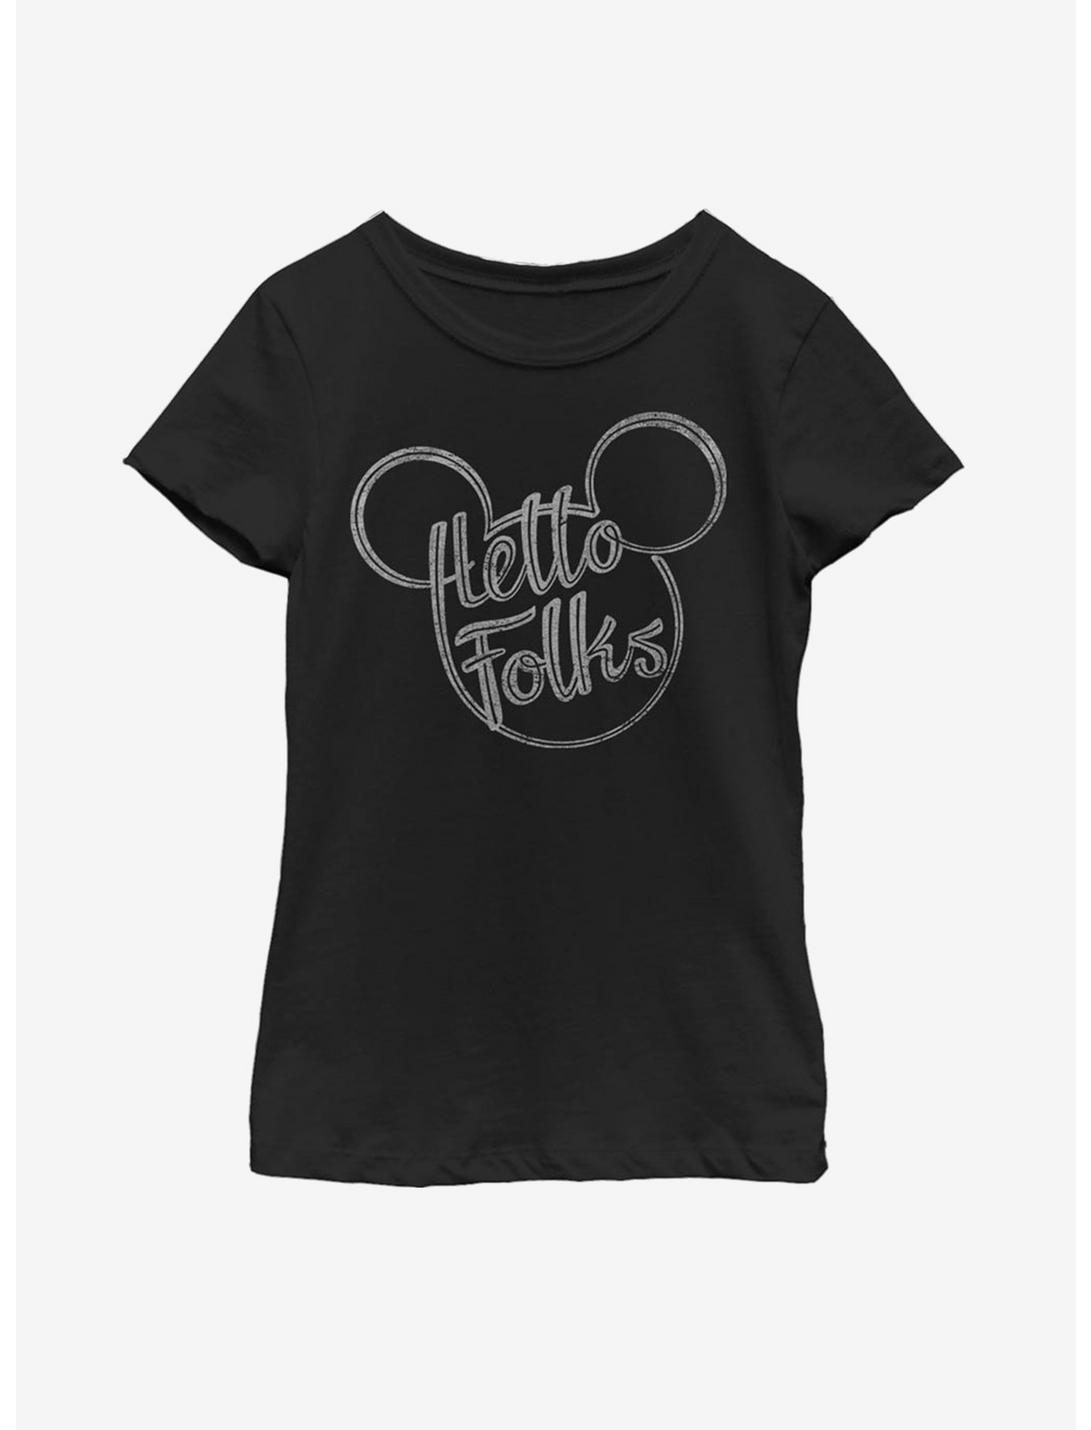 Disney Mickey Mouse Hello Folks Youth Girls T-Shirt, BLACK, hi-res